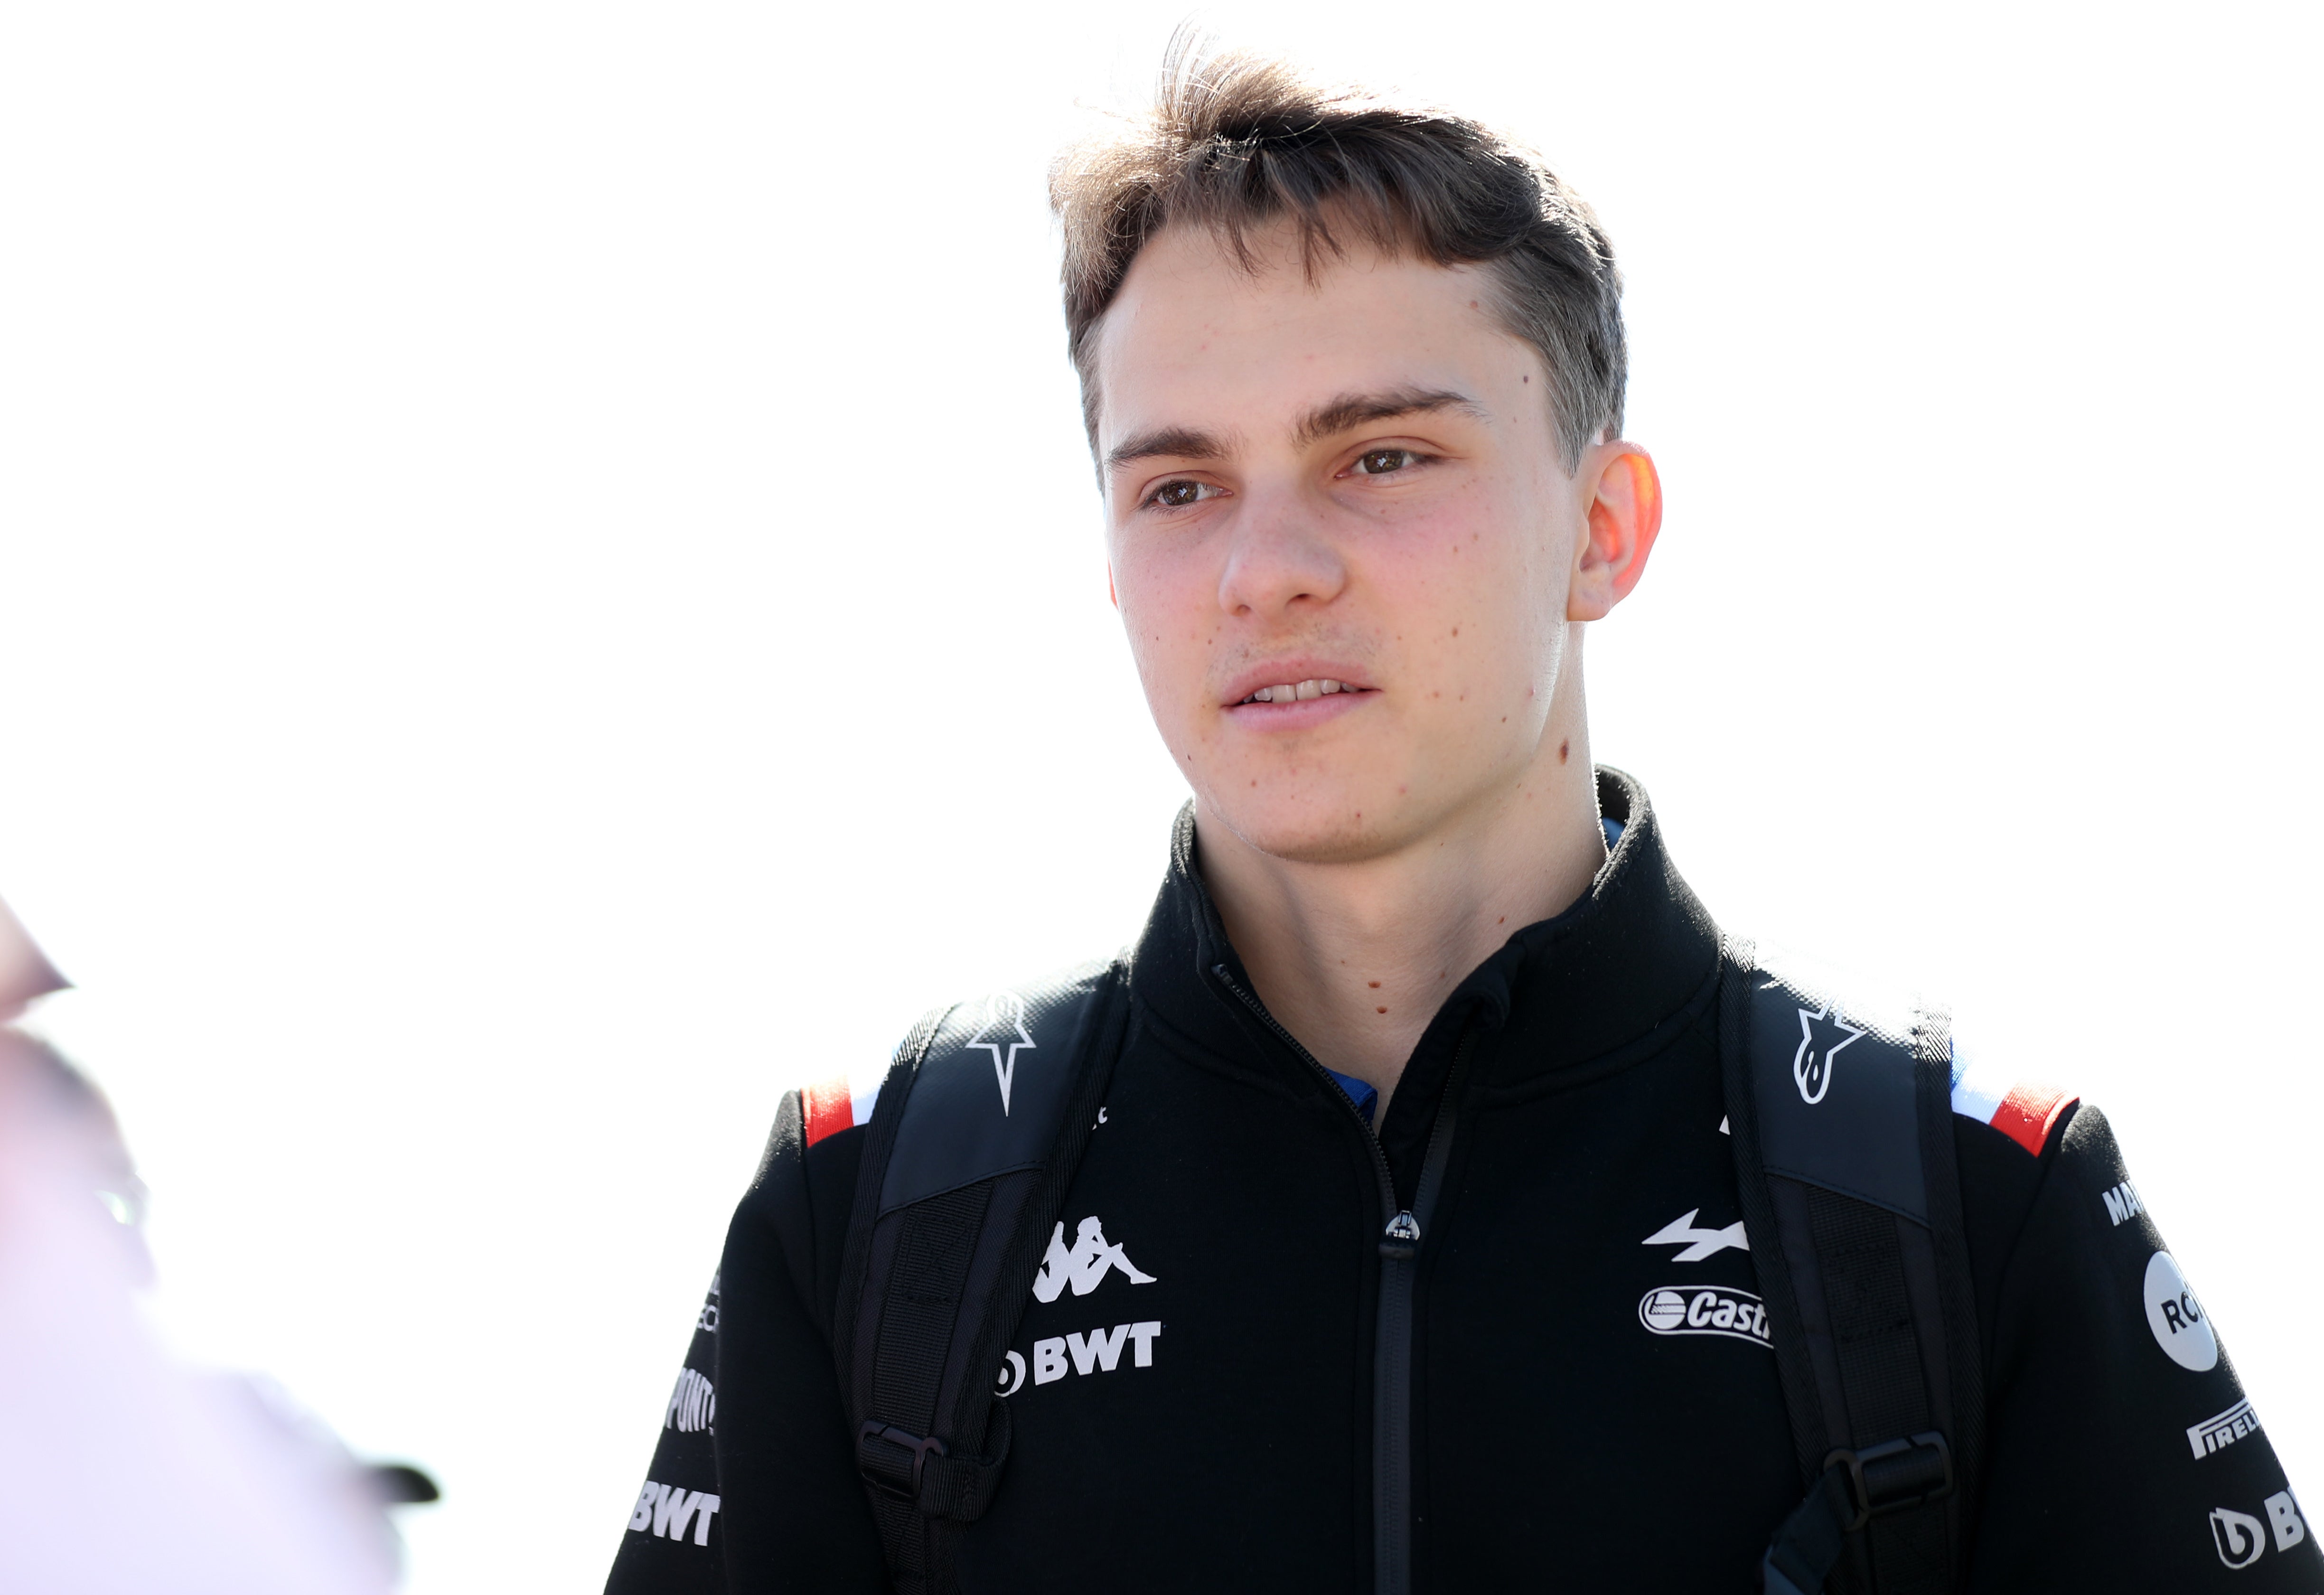 Oscar Piastri has signed a deal to race for McLaren